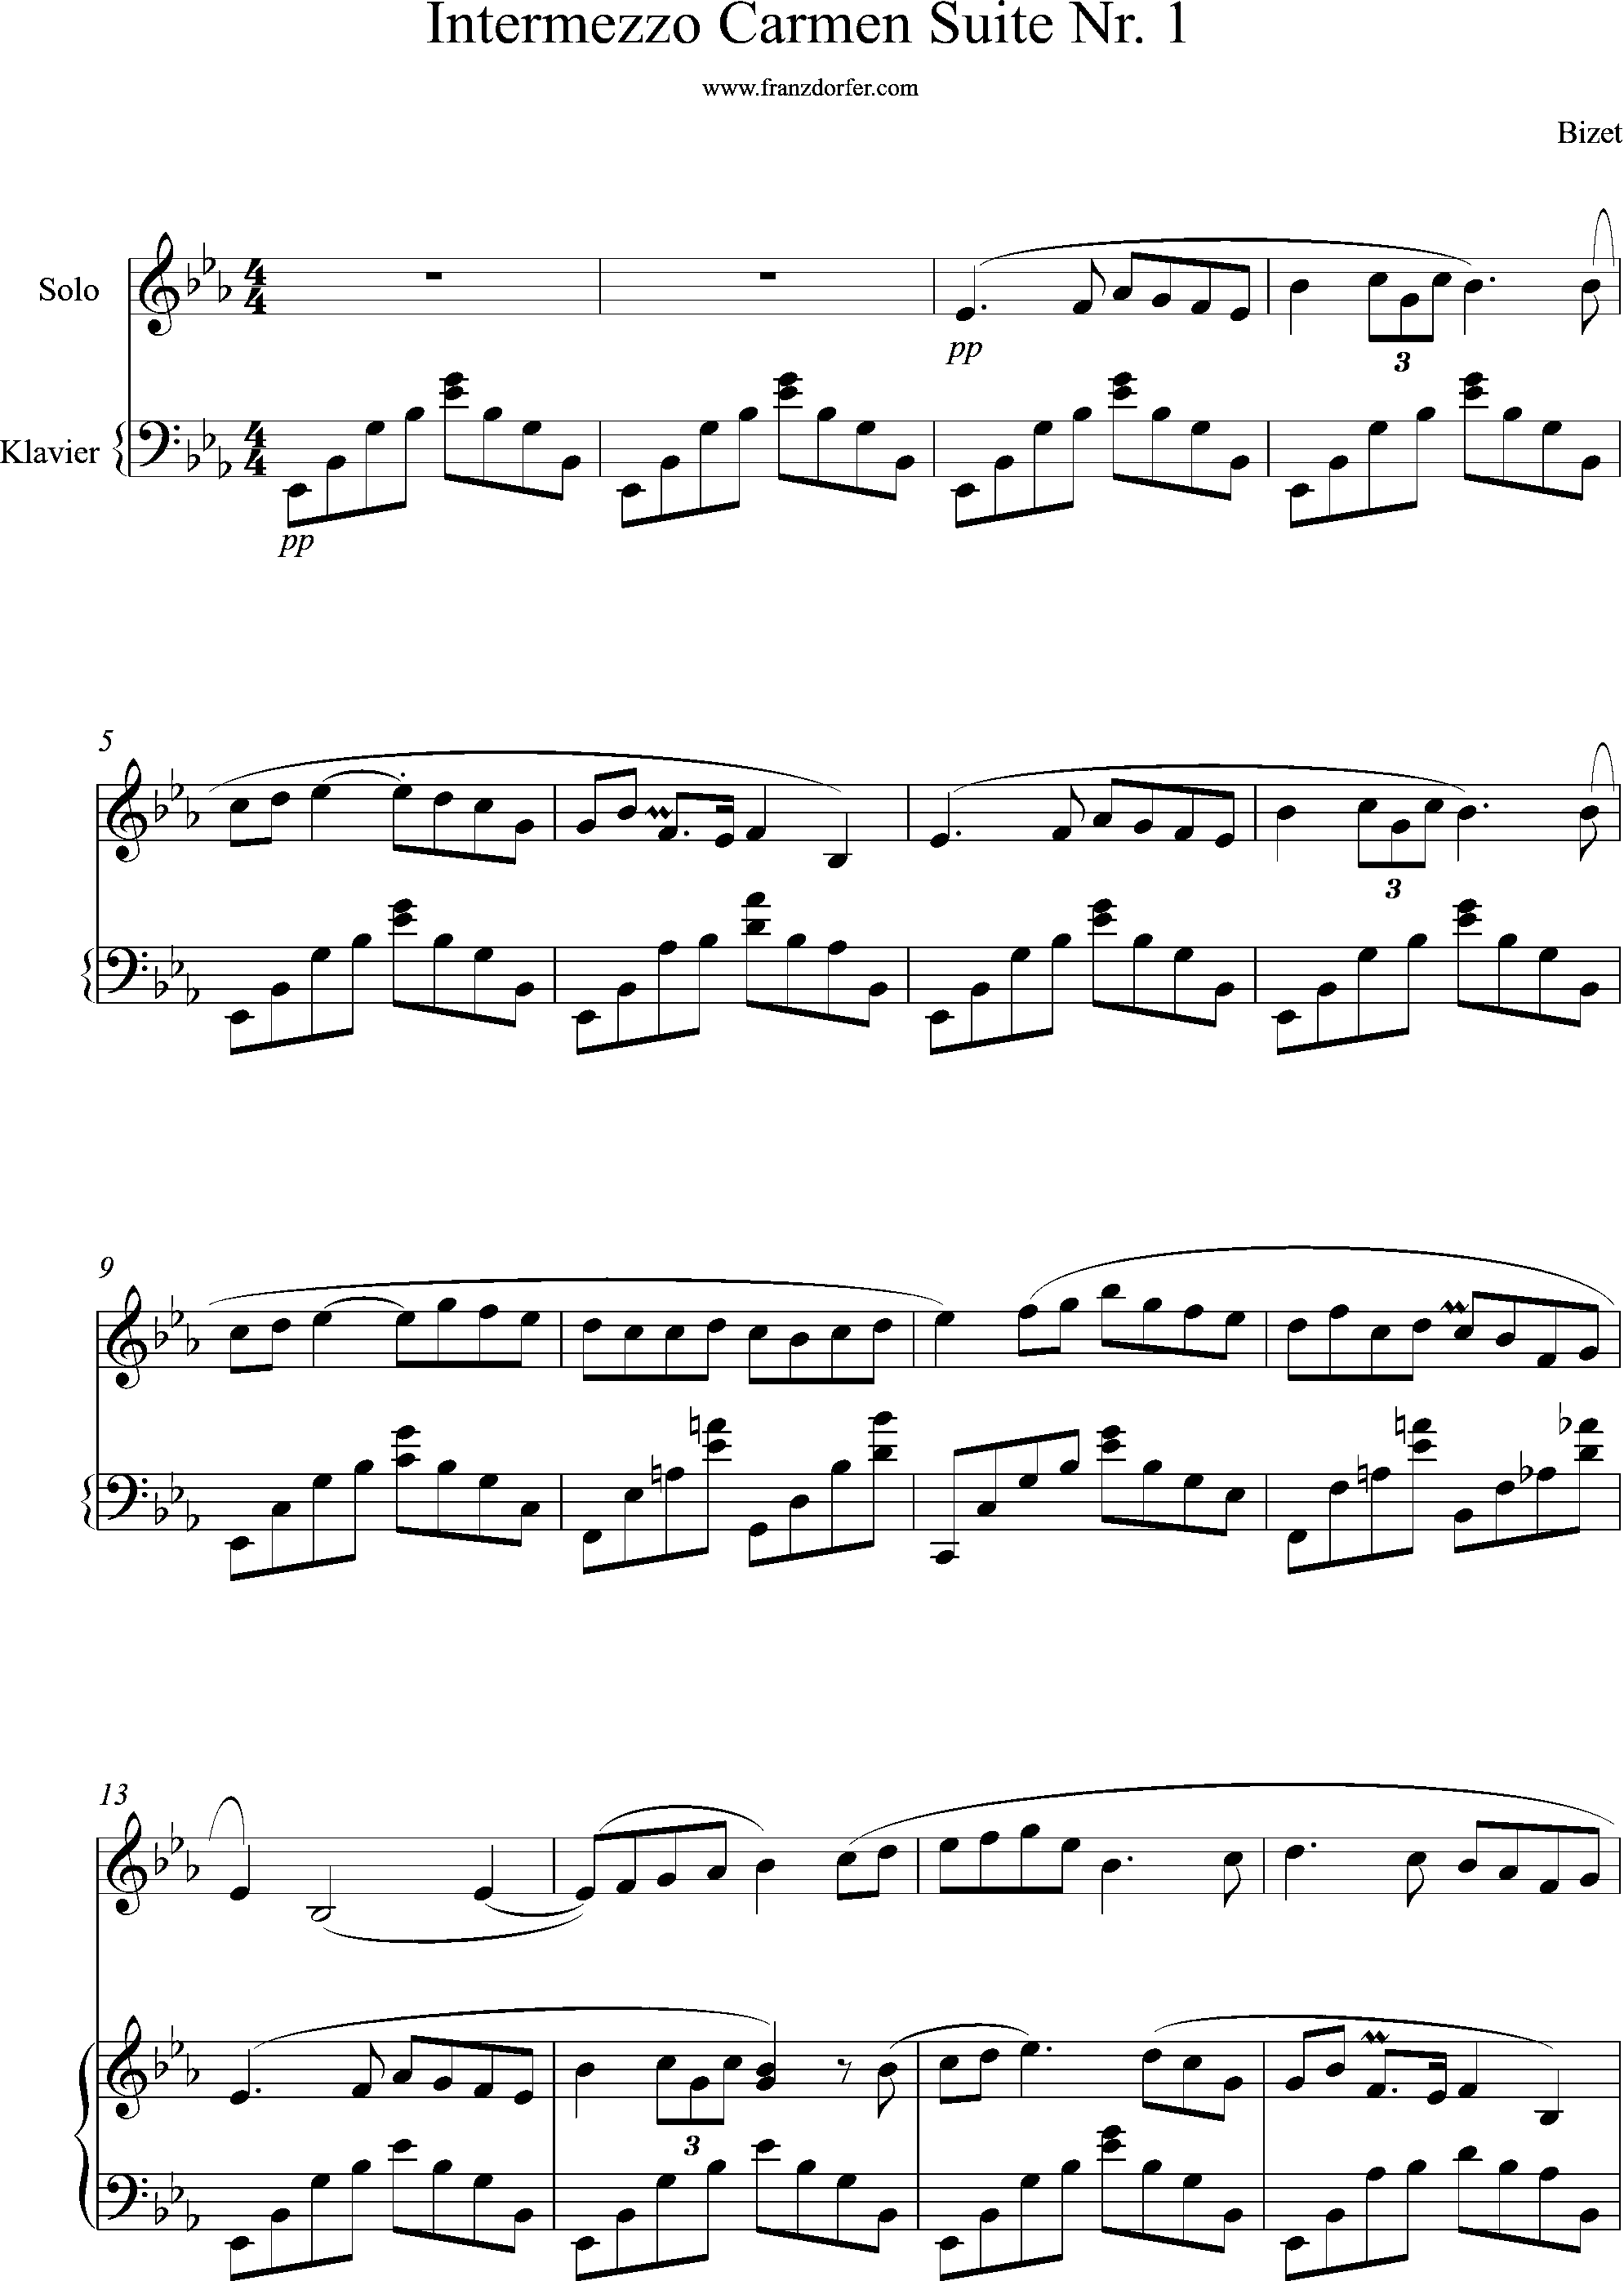 Piano Sheetmusic- Intermezzo from "Carmen" - Bizet